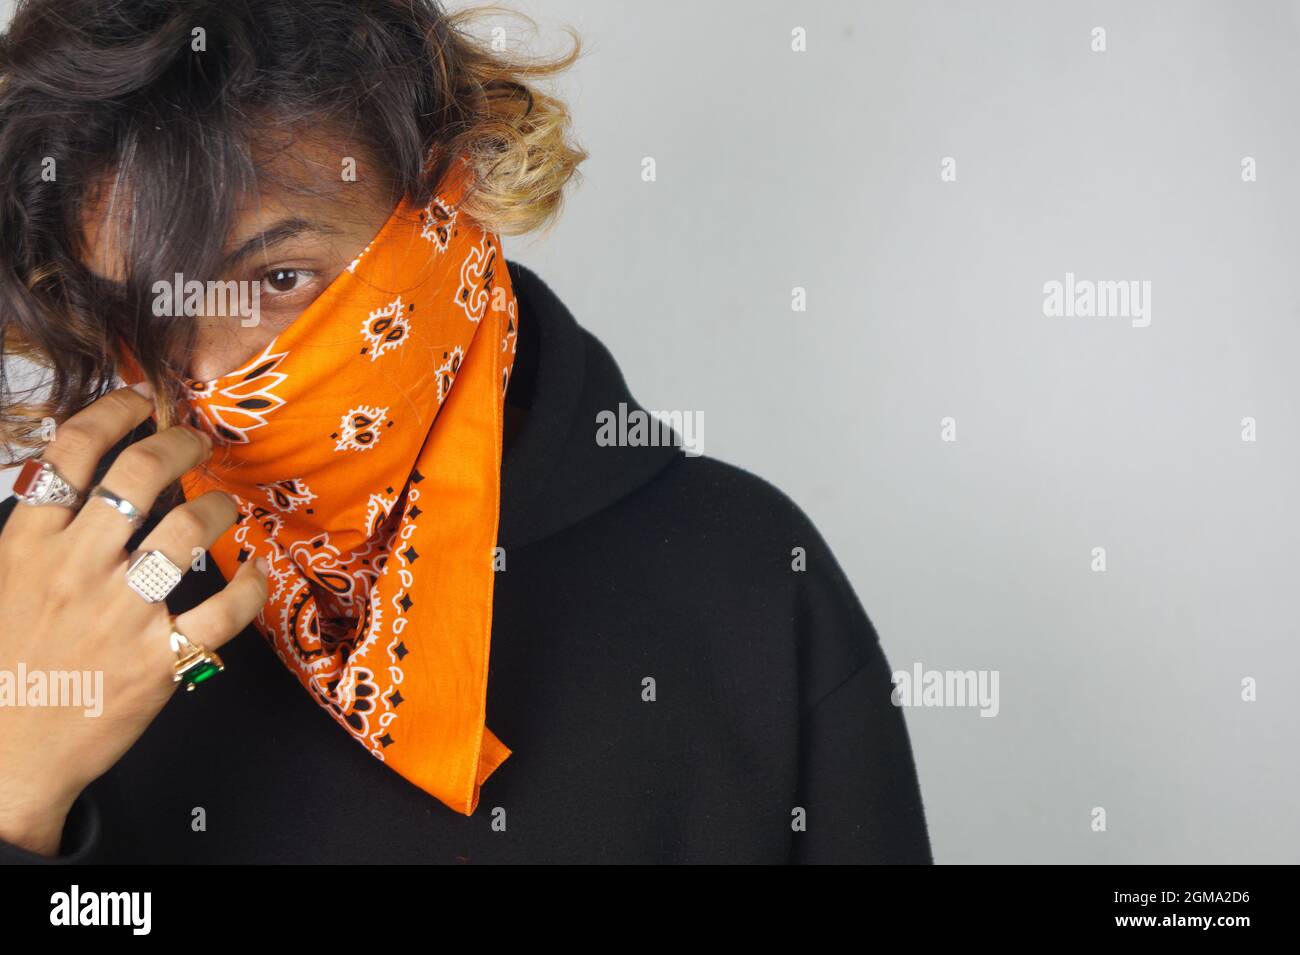 A$AP ROCKYs YELLOW BANDANA on X: Why is he wearing a black bandana??   / X